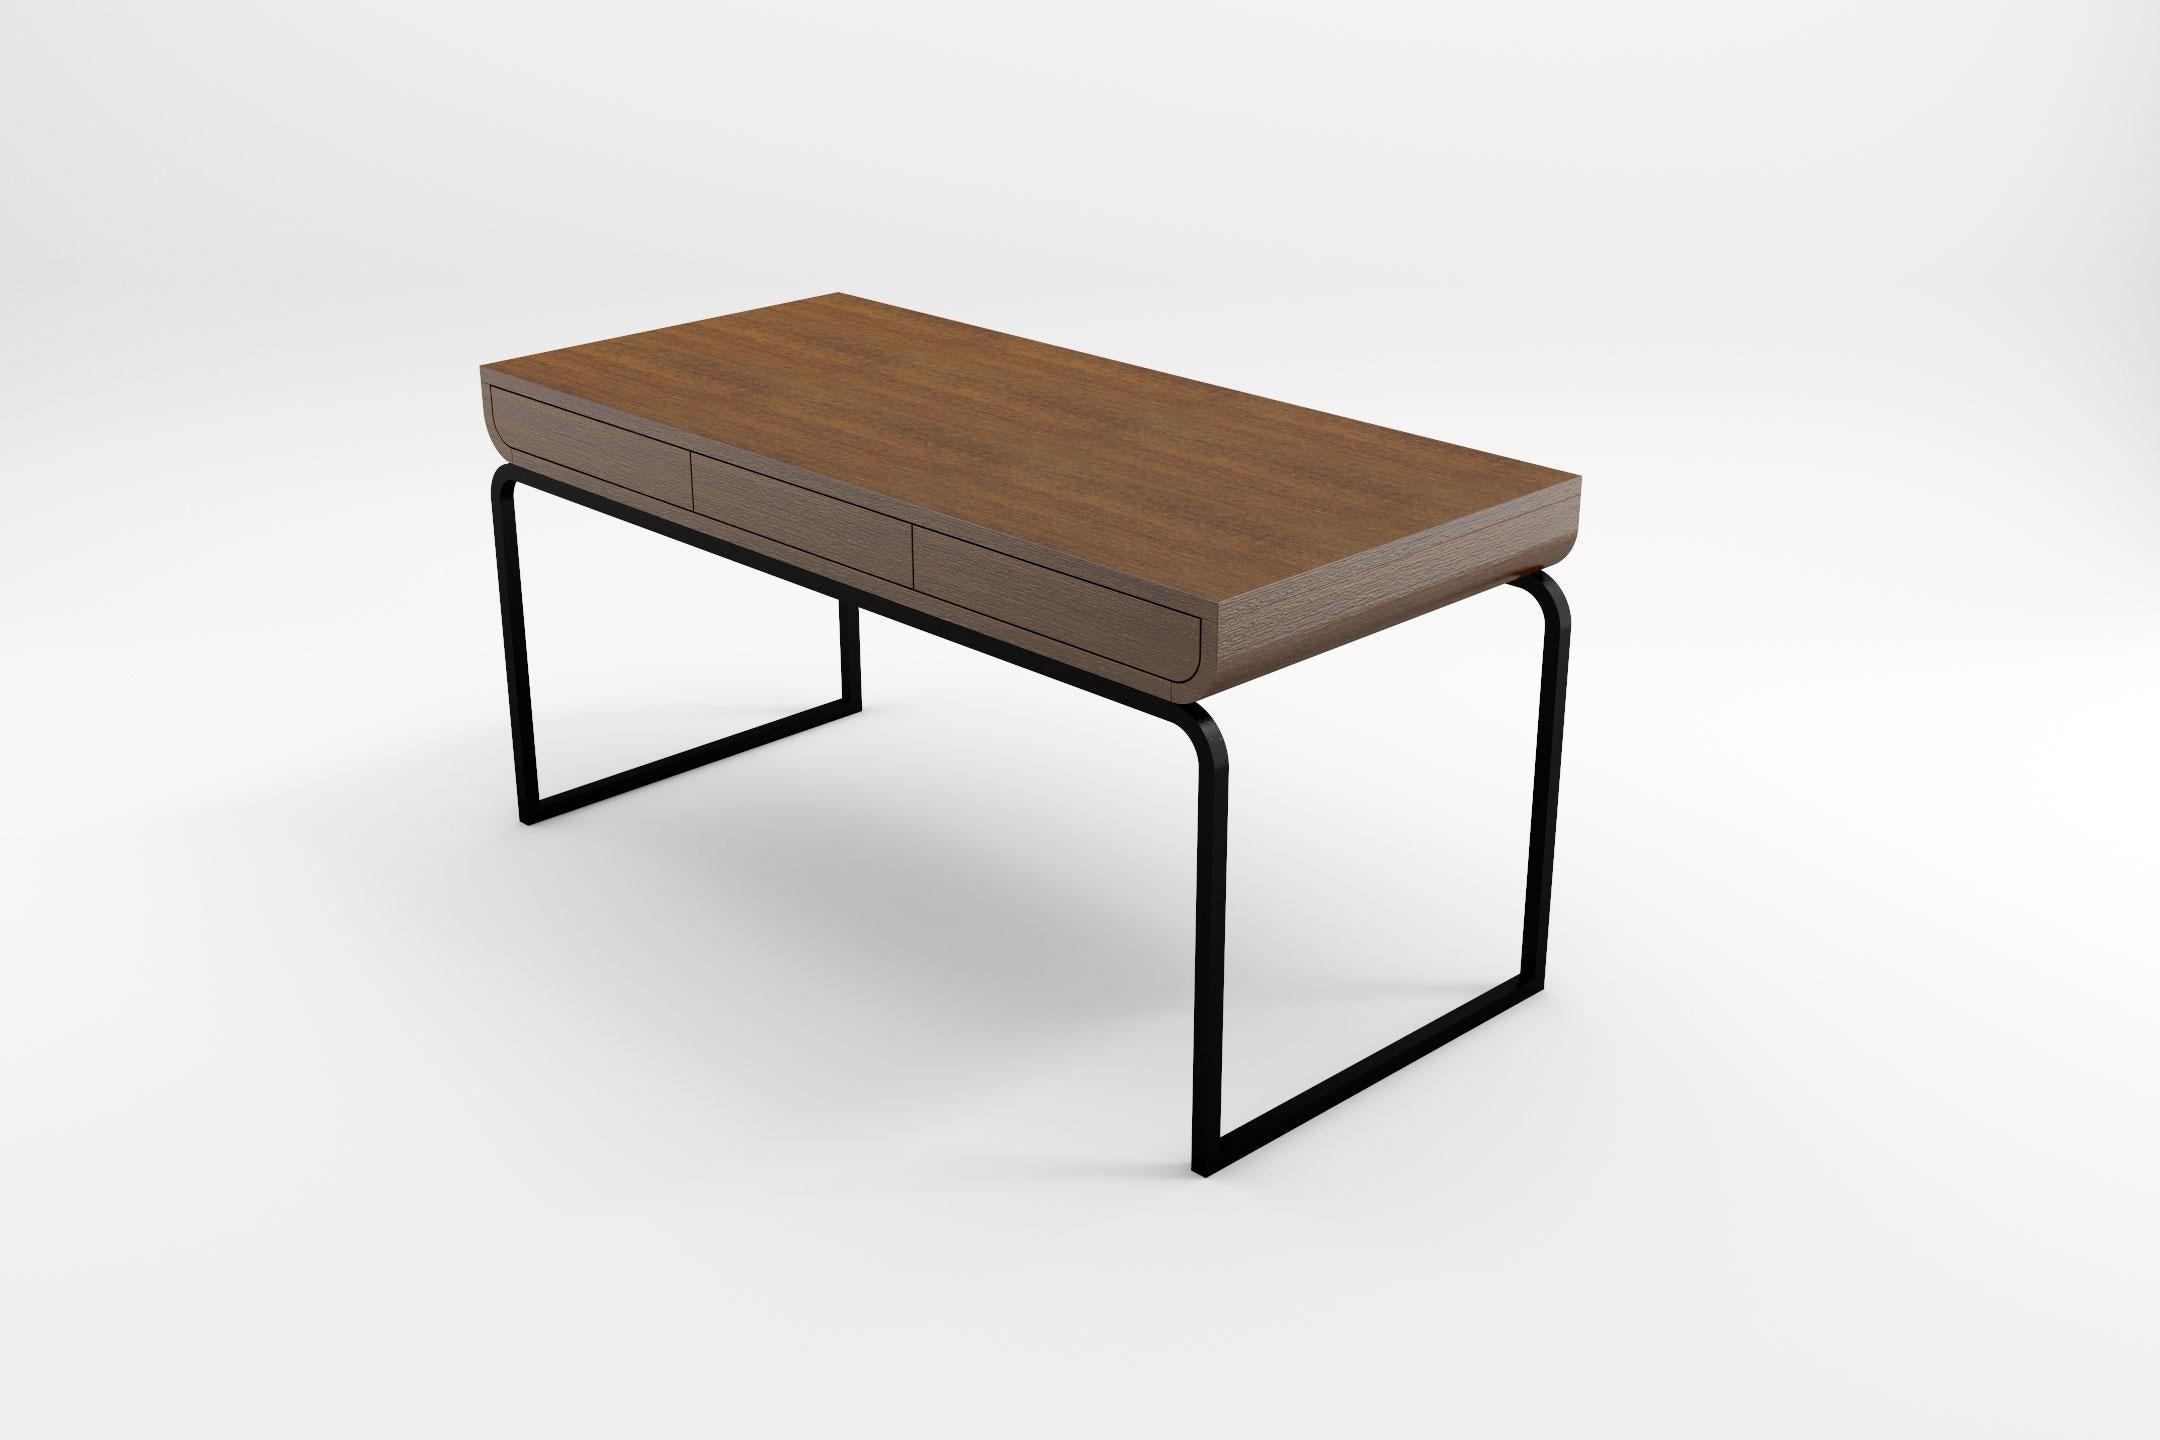 Varnished Raw Desk - Modern Desk in Natural Wenge with Wrought Iron Base For Sale